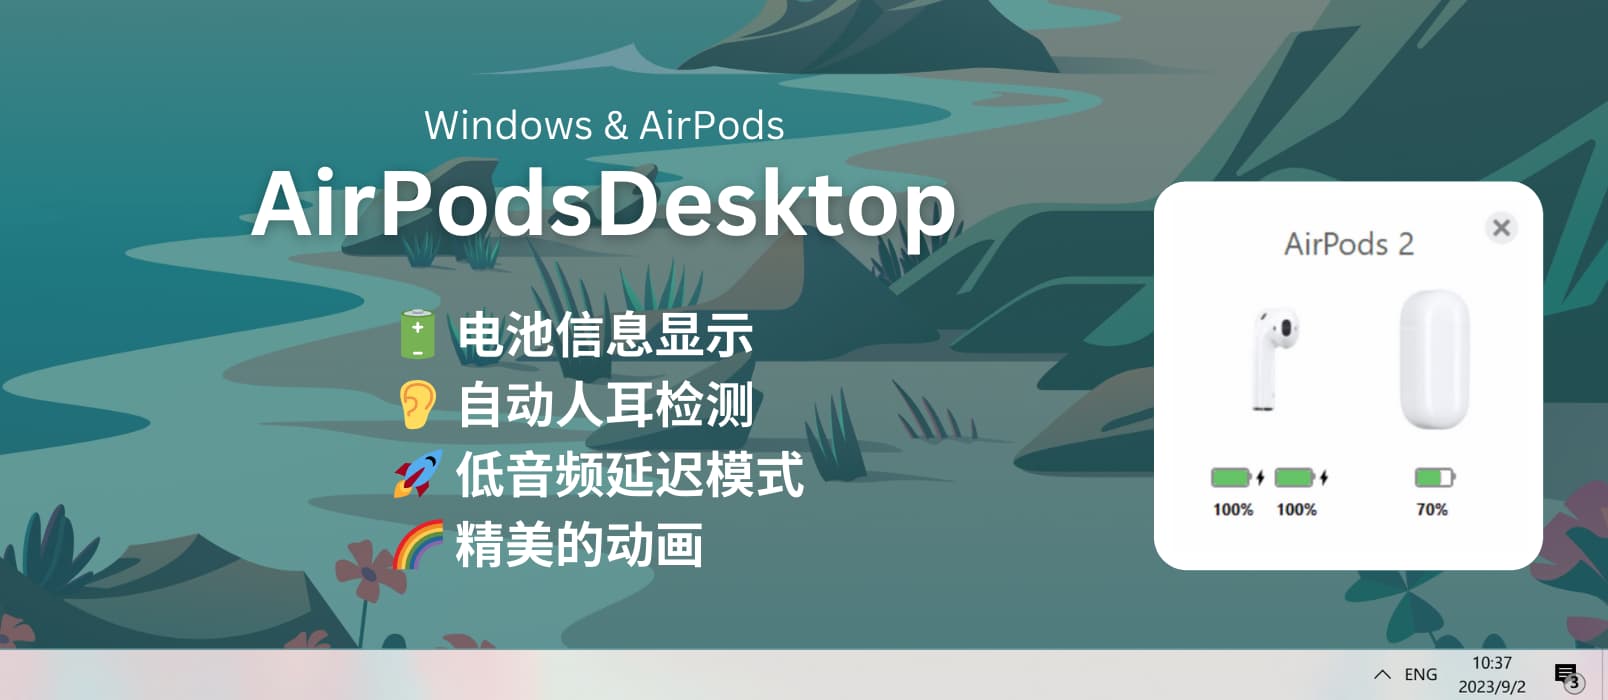 AirPodsDesktop - 开源 AirPods 增强：在 Windows 上动画显示电池信息、入耳检测、低音频延迟 1